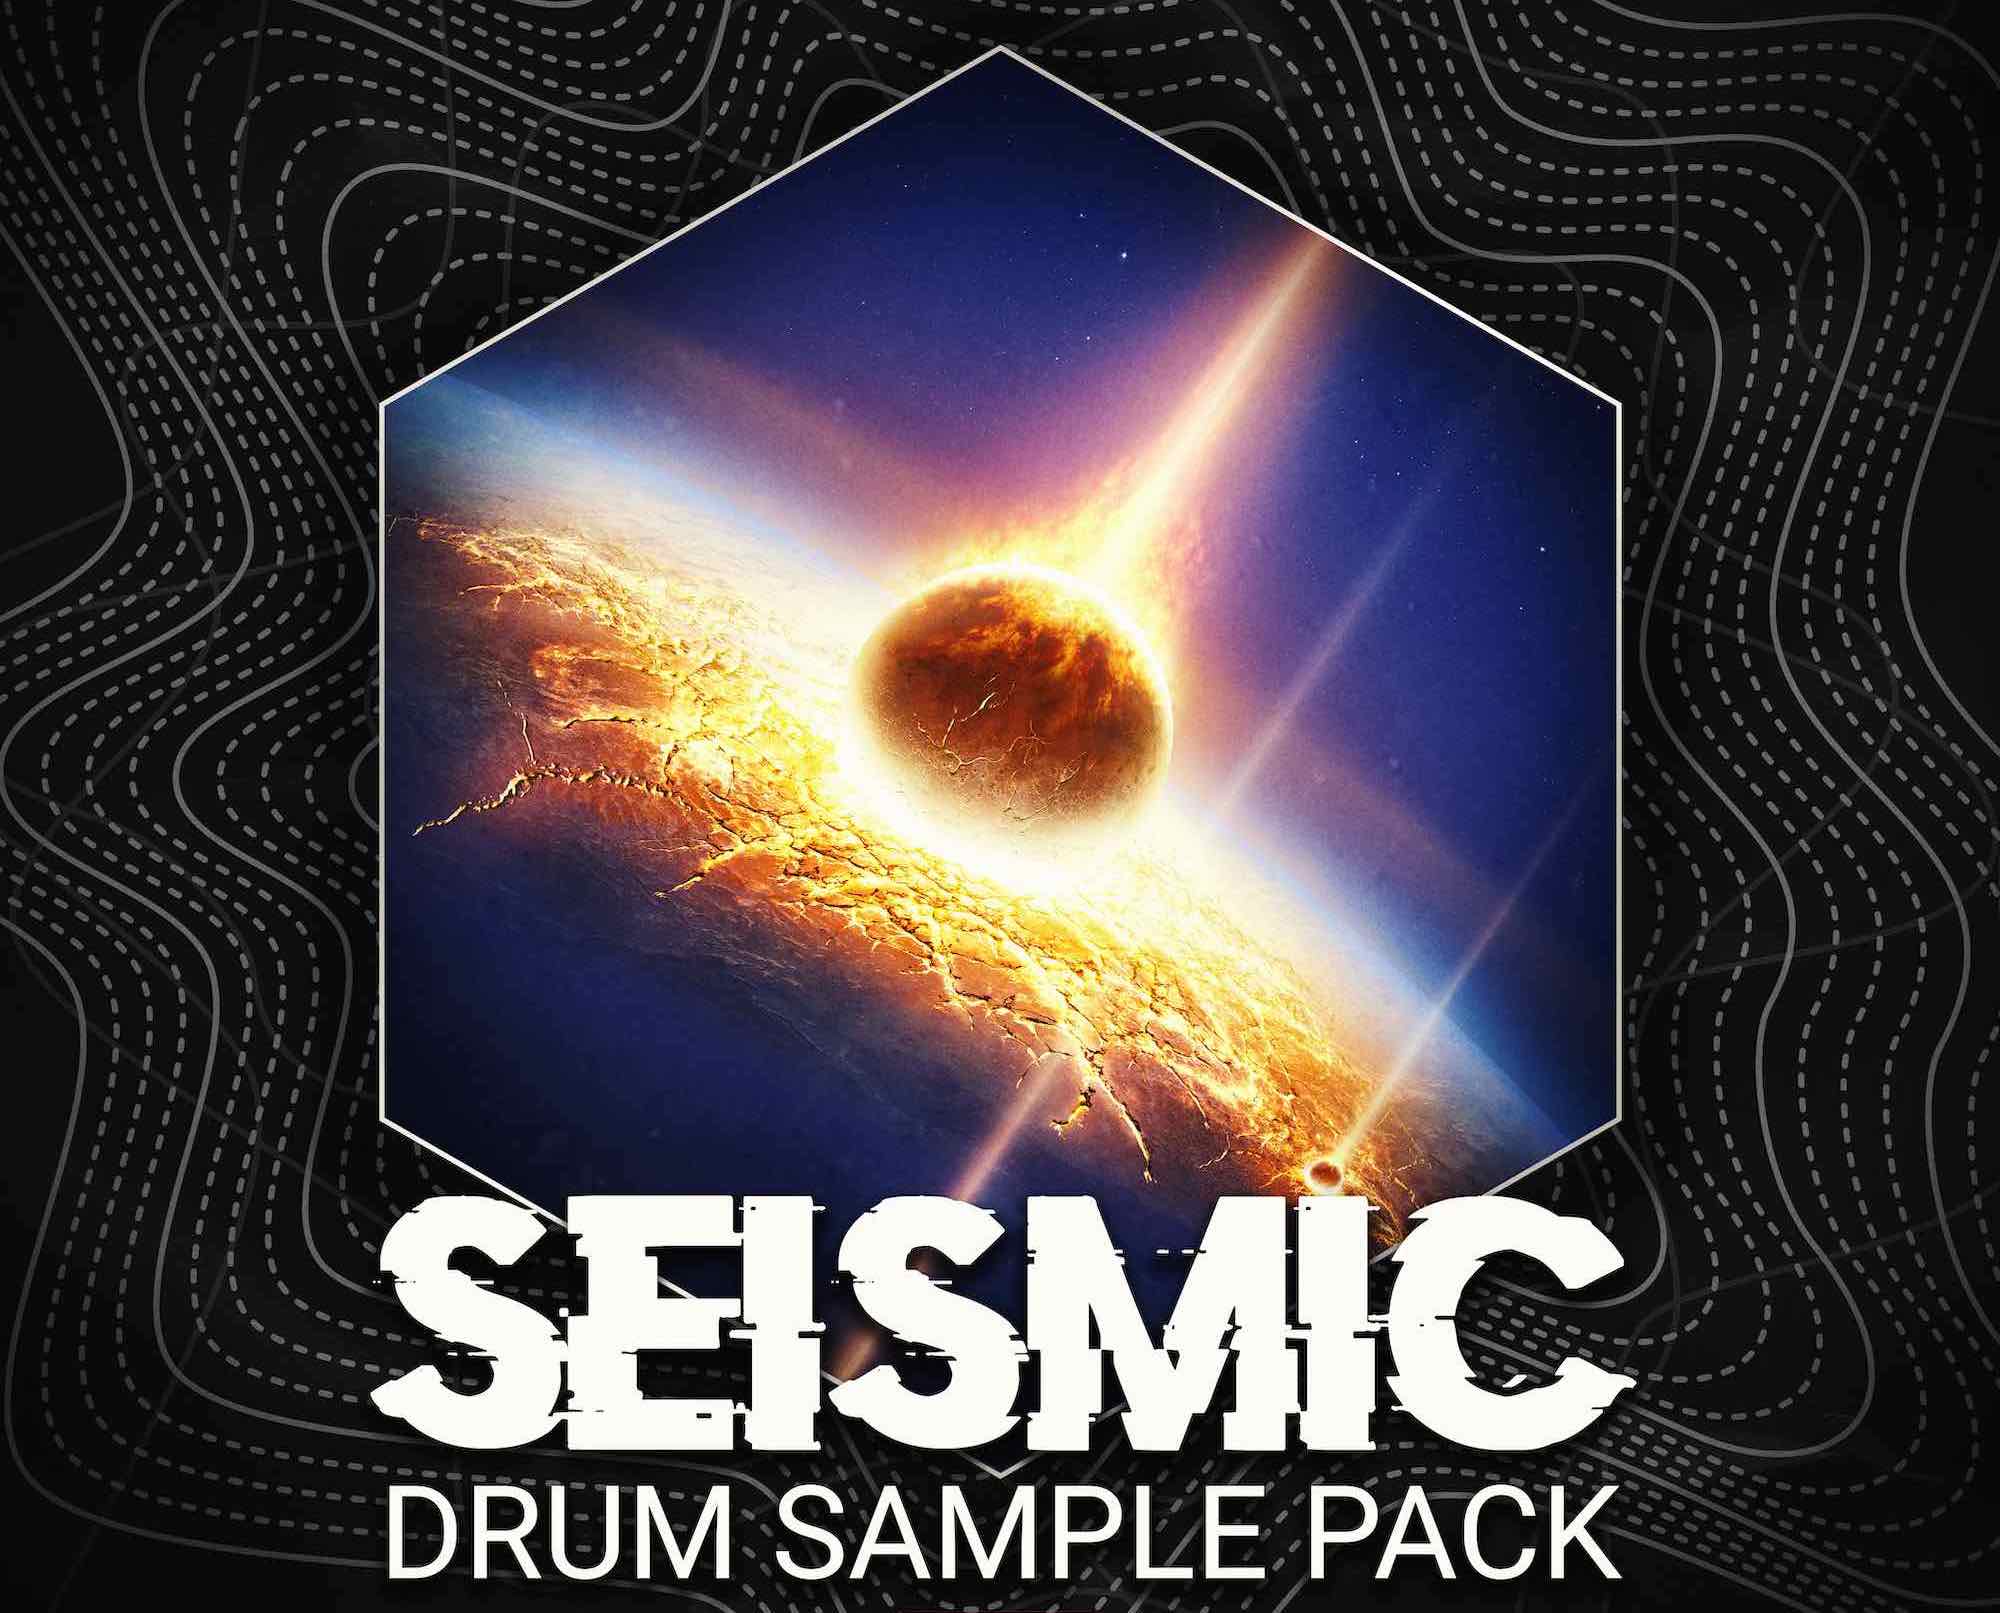 Slate Digital’s SEISMIC is a free drum sample pack, with 800 royalty-free drum samples